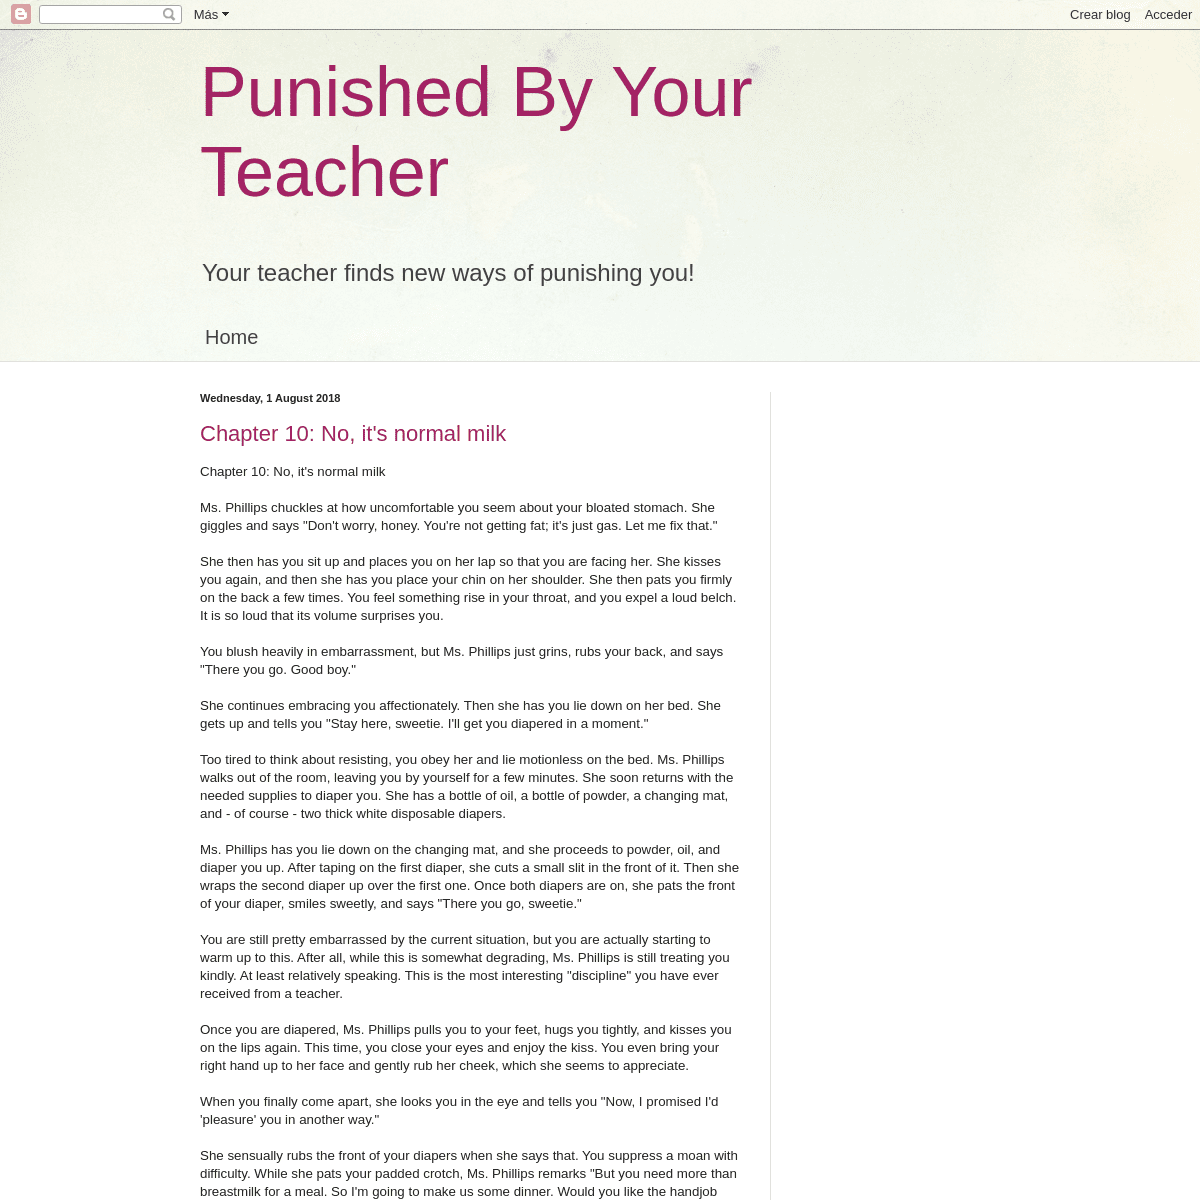 A complete backup of punishedbyyourteacher.blogspot.com